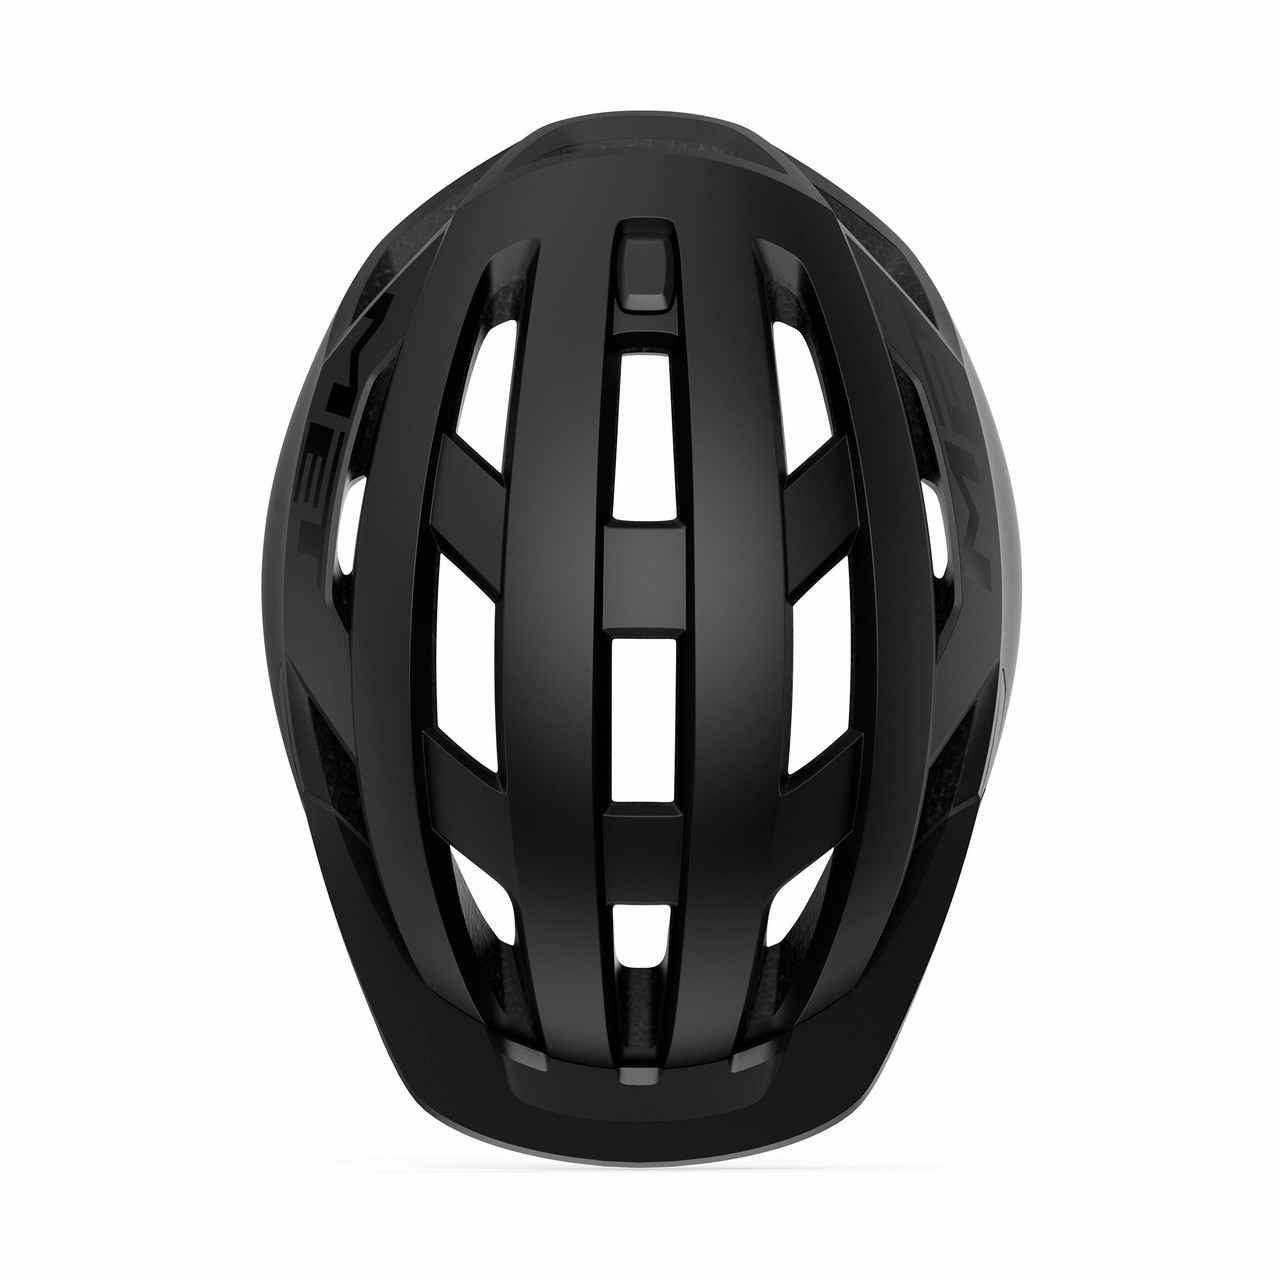 Allroad MIPS Helmet Black/Matte